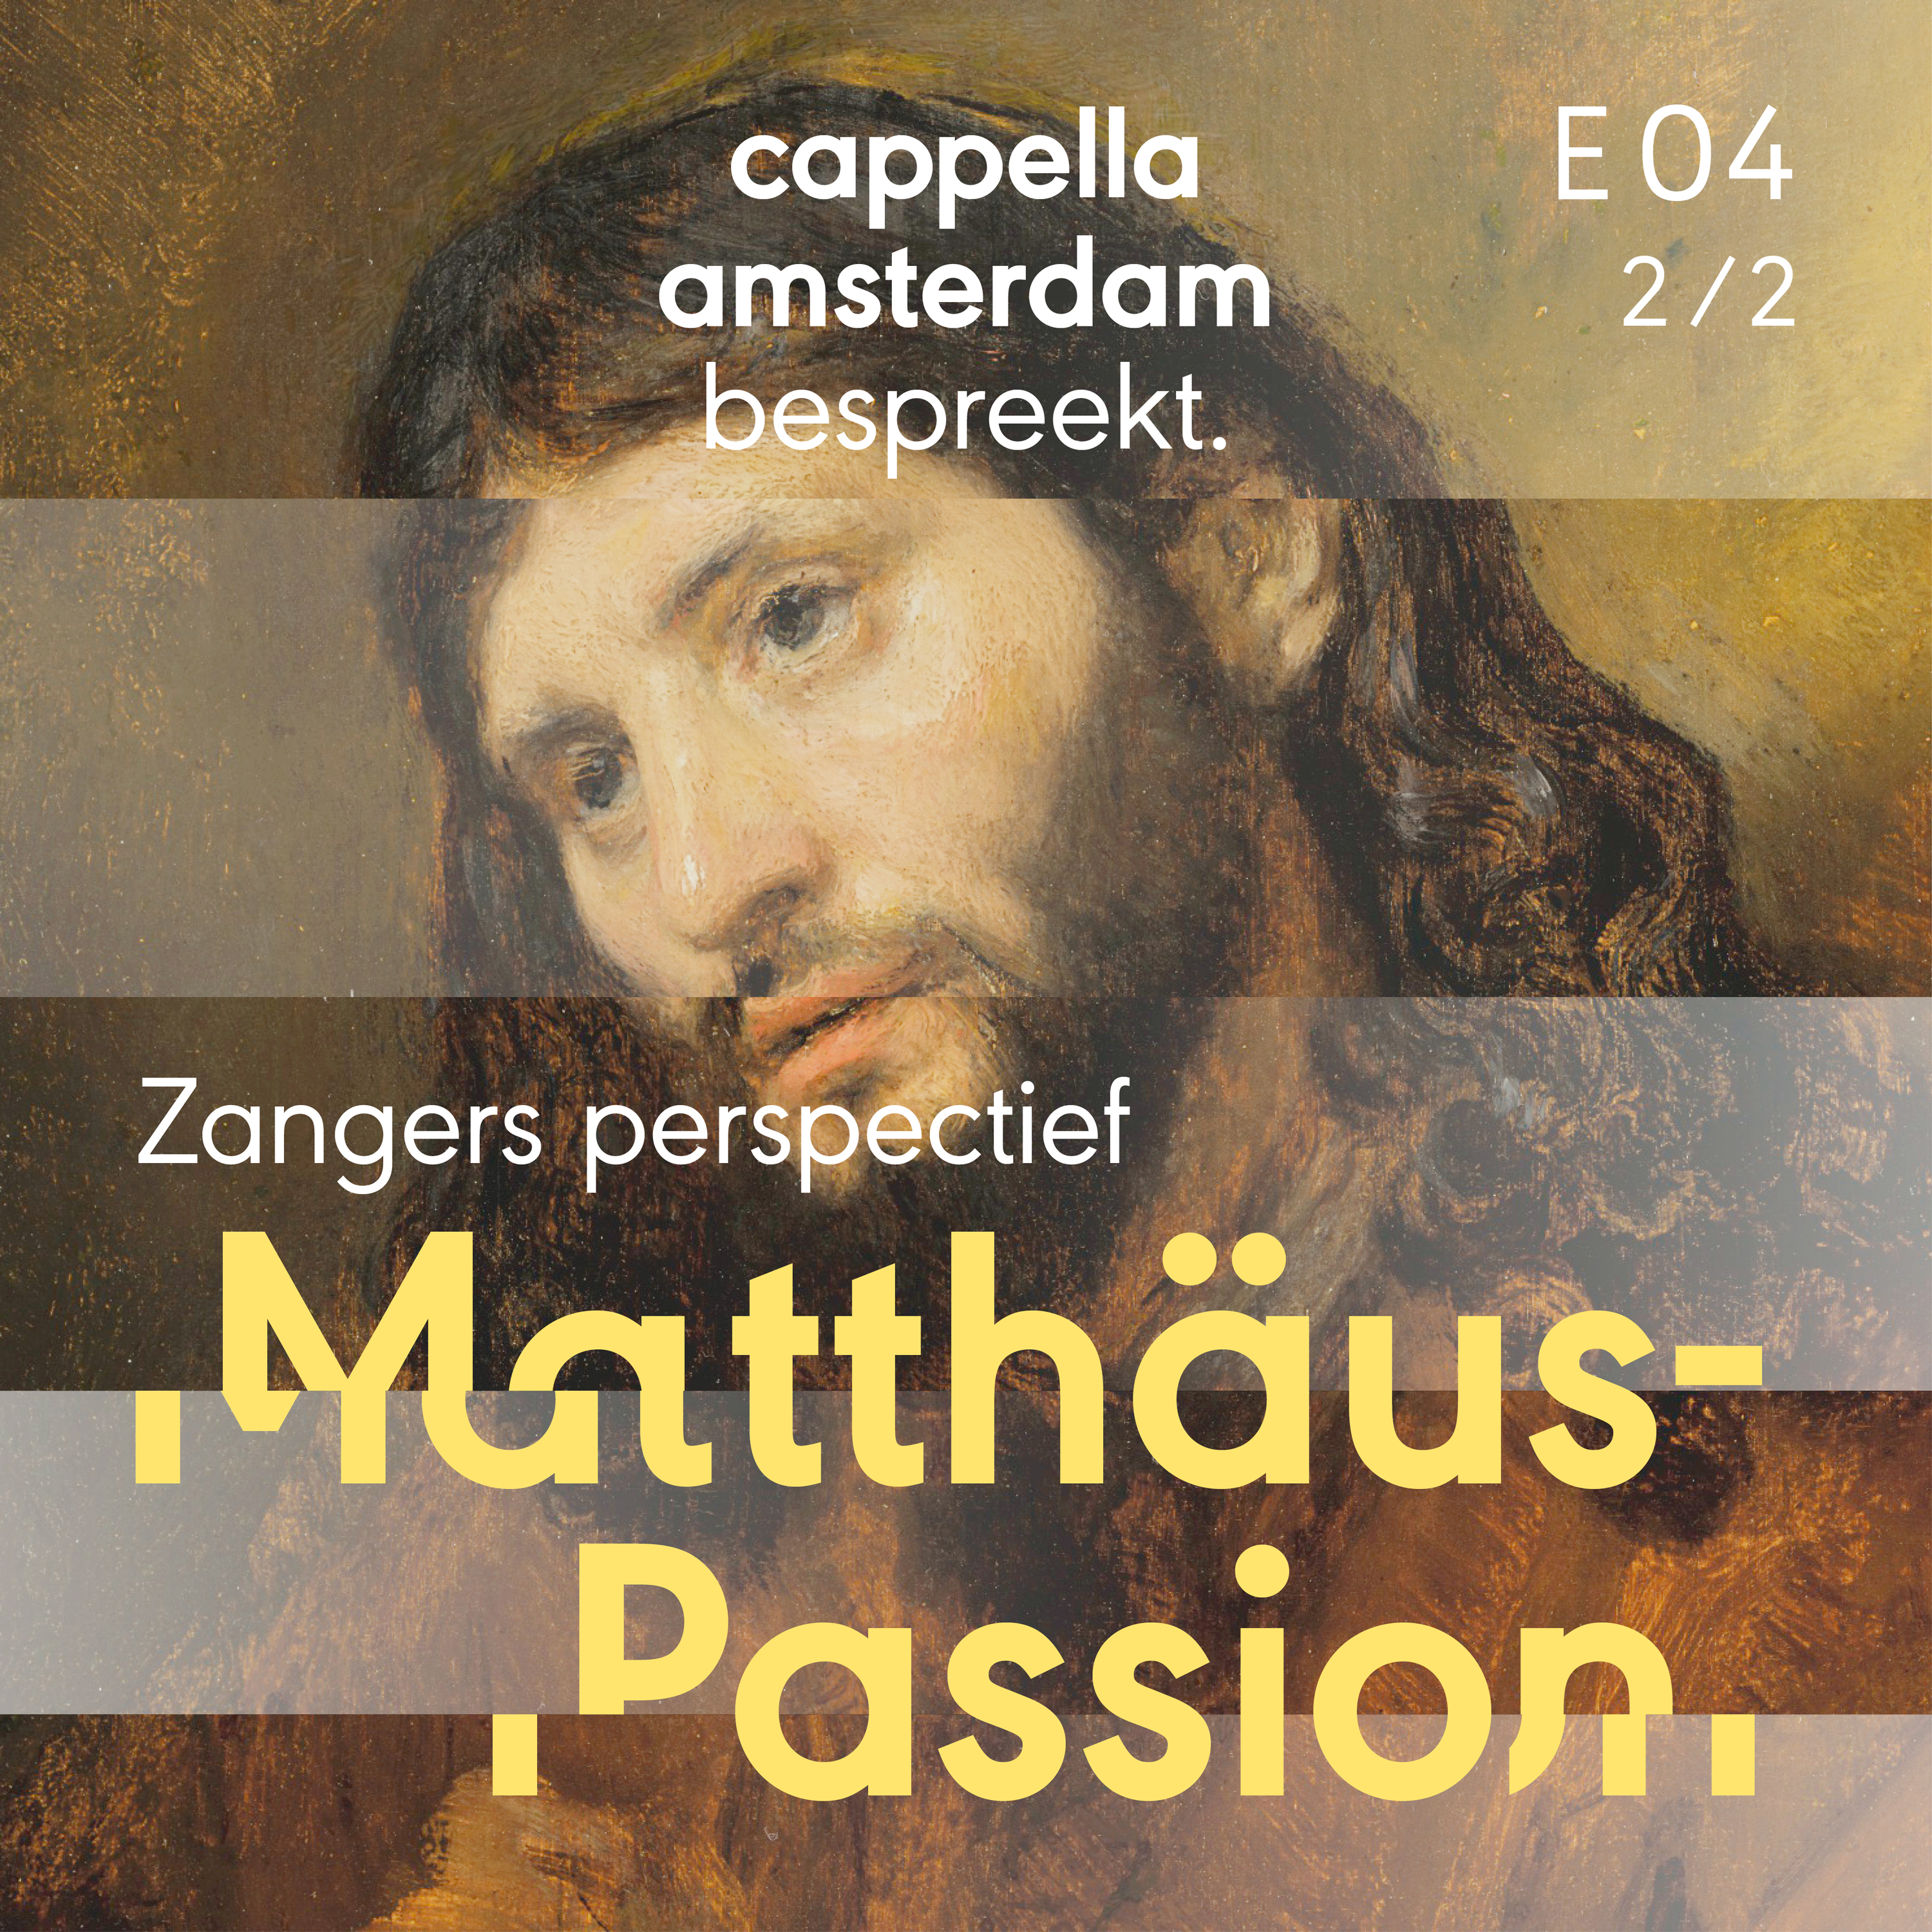 Matthäus-Passion: Zangers perspectief Ep. 2